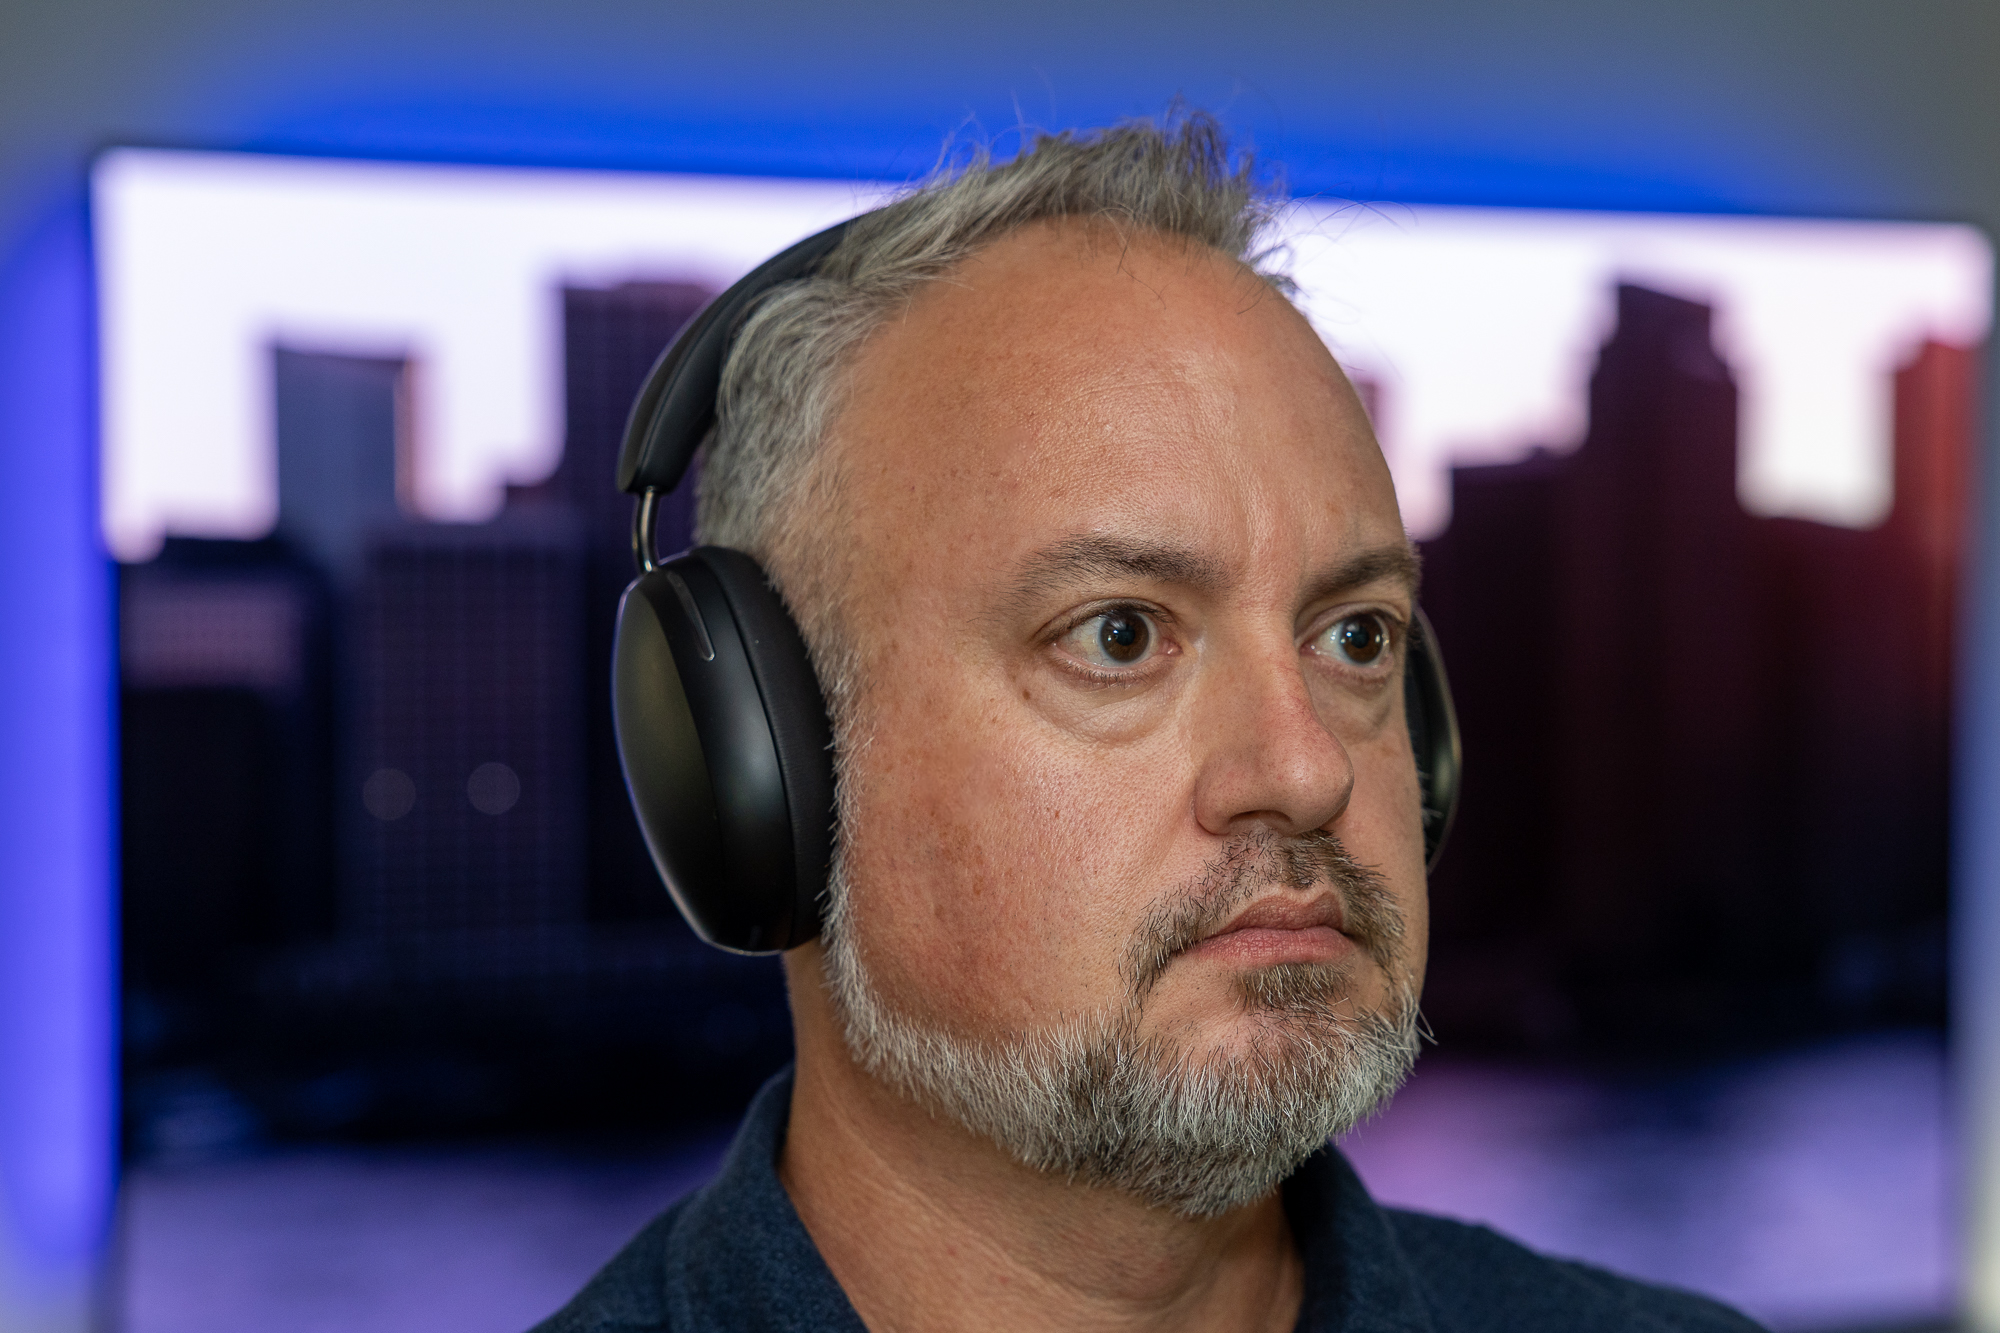 Phil Nickinson wearing the Sonos Ace headphones.